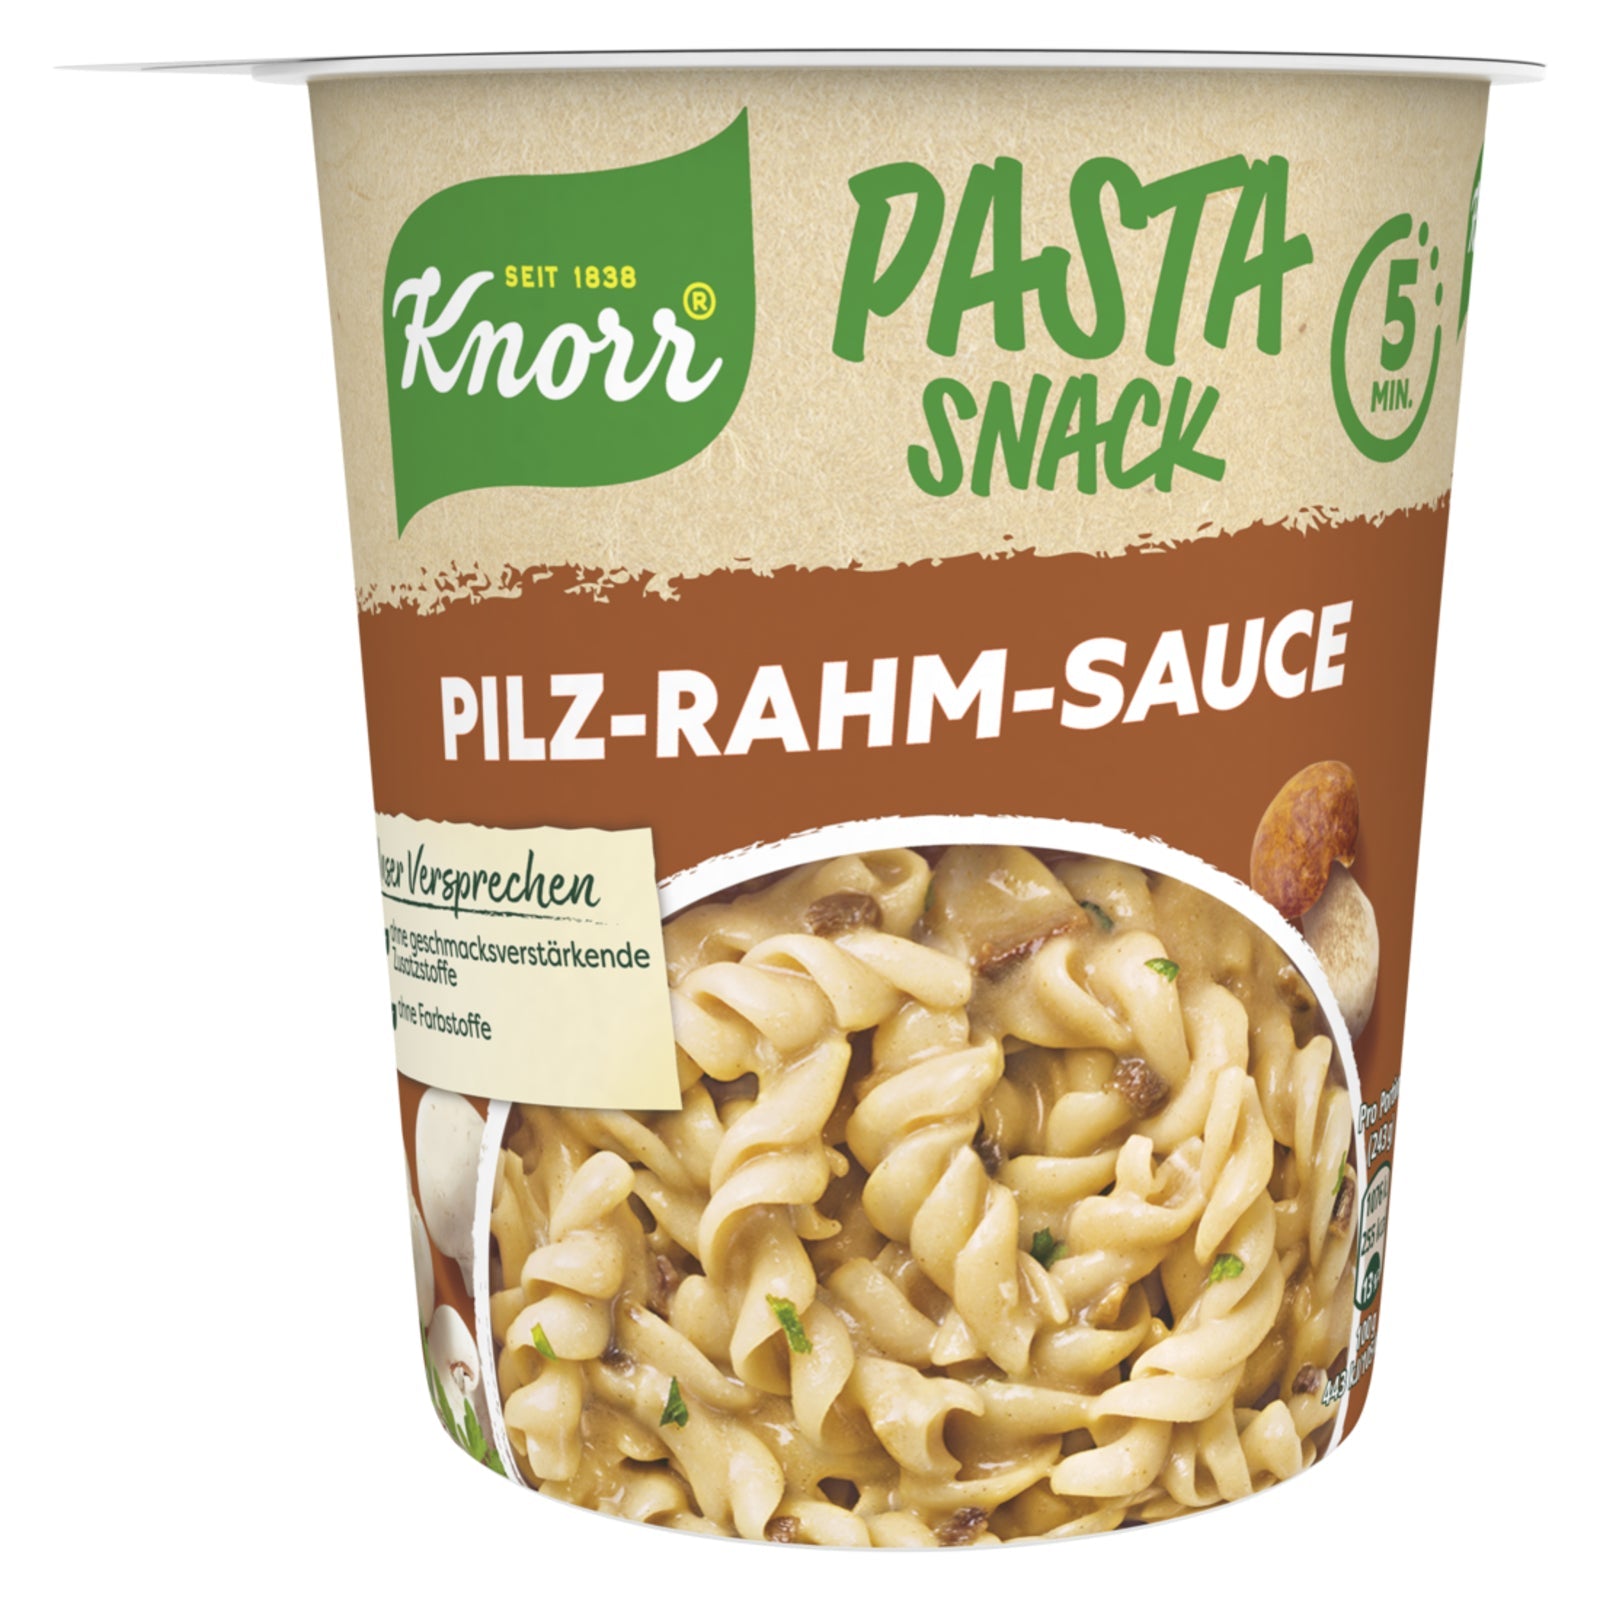 Knorr Pasta Snack Pilz-Rahm-Sauce leckere Instant Nudeln fertig in nur 5 Minuten 63 g